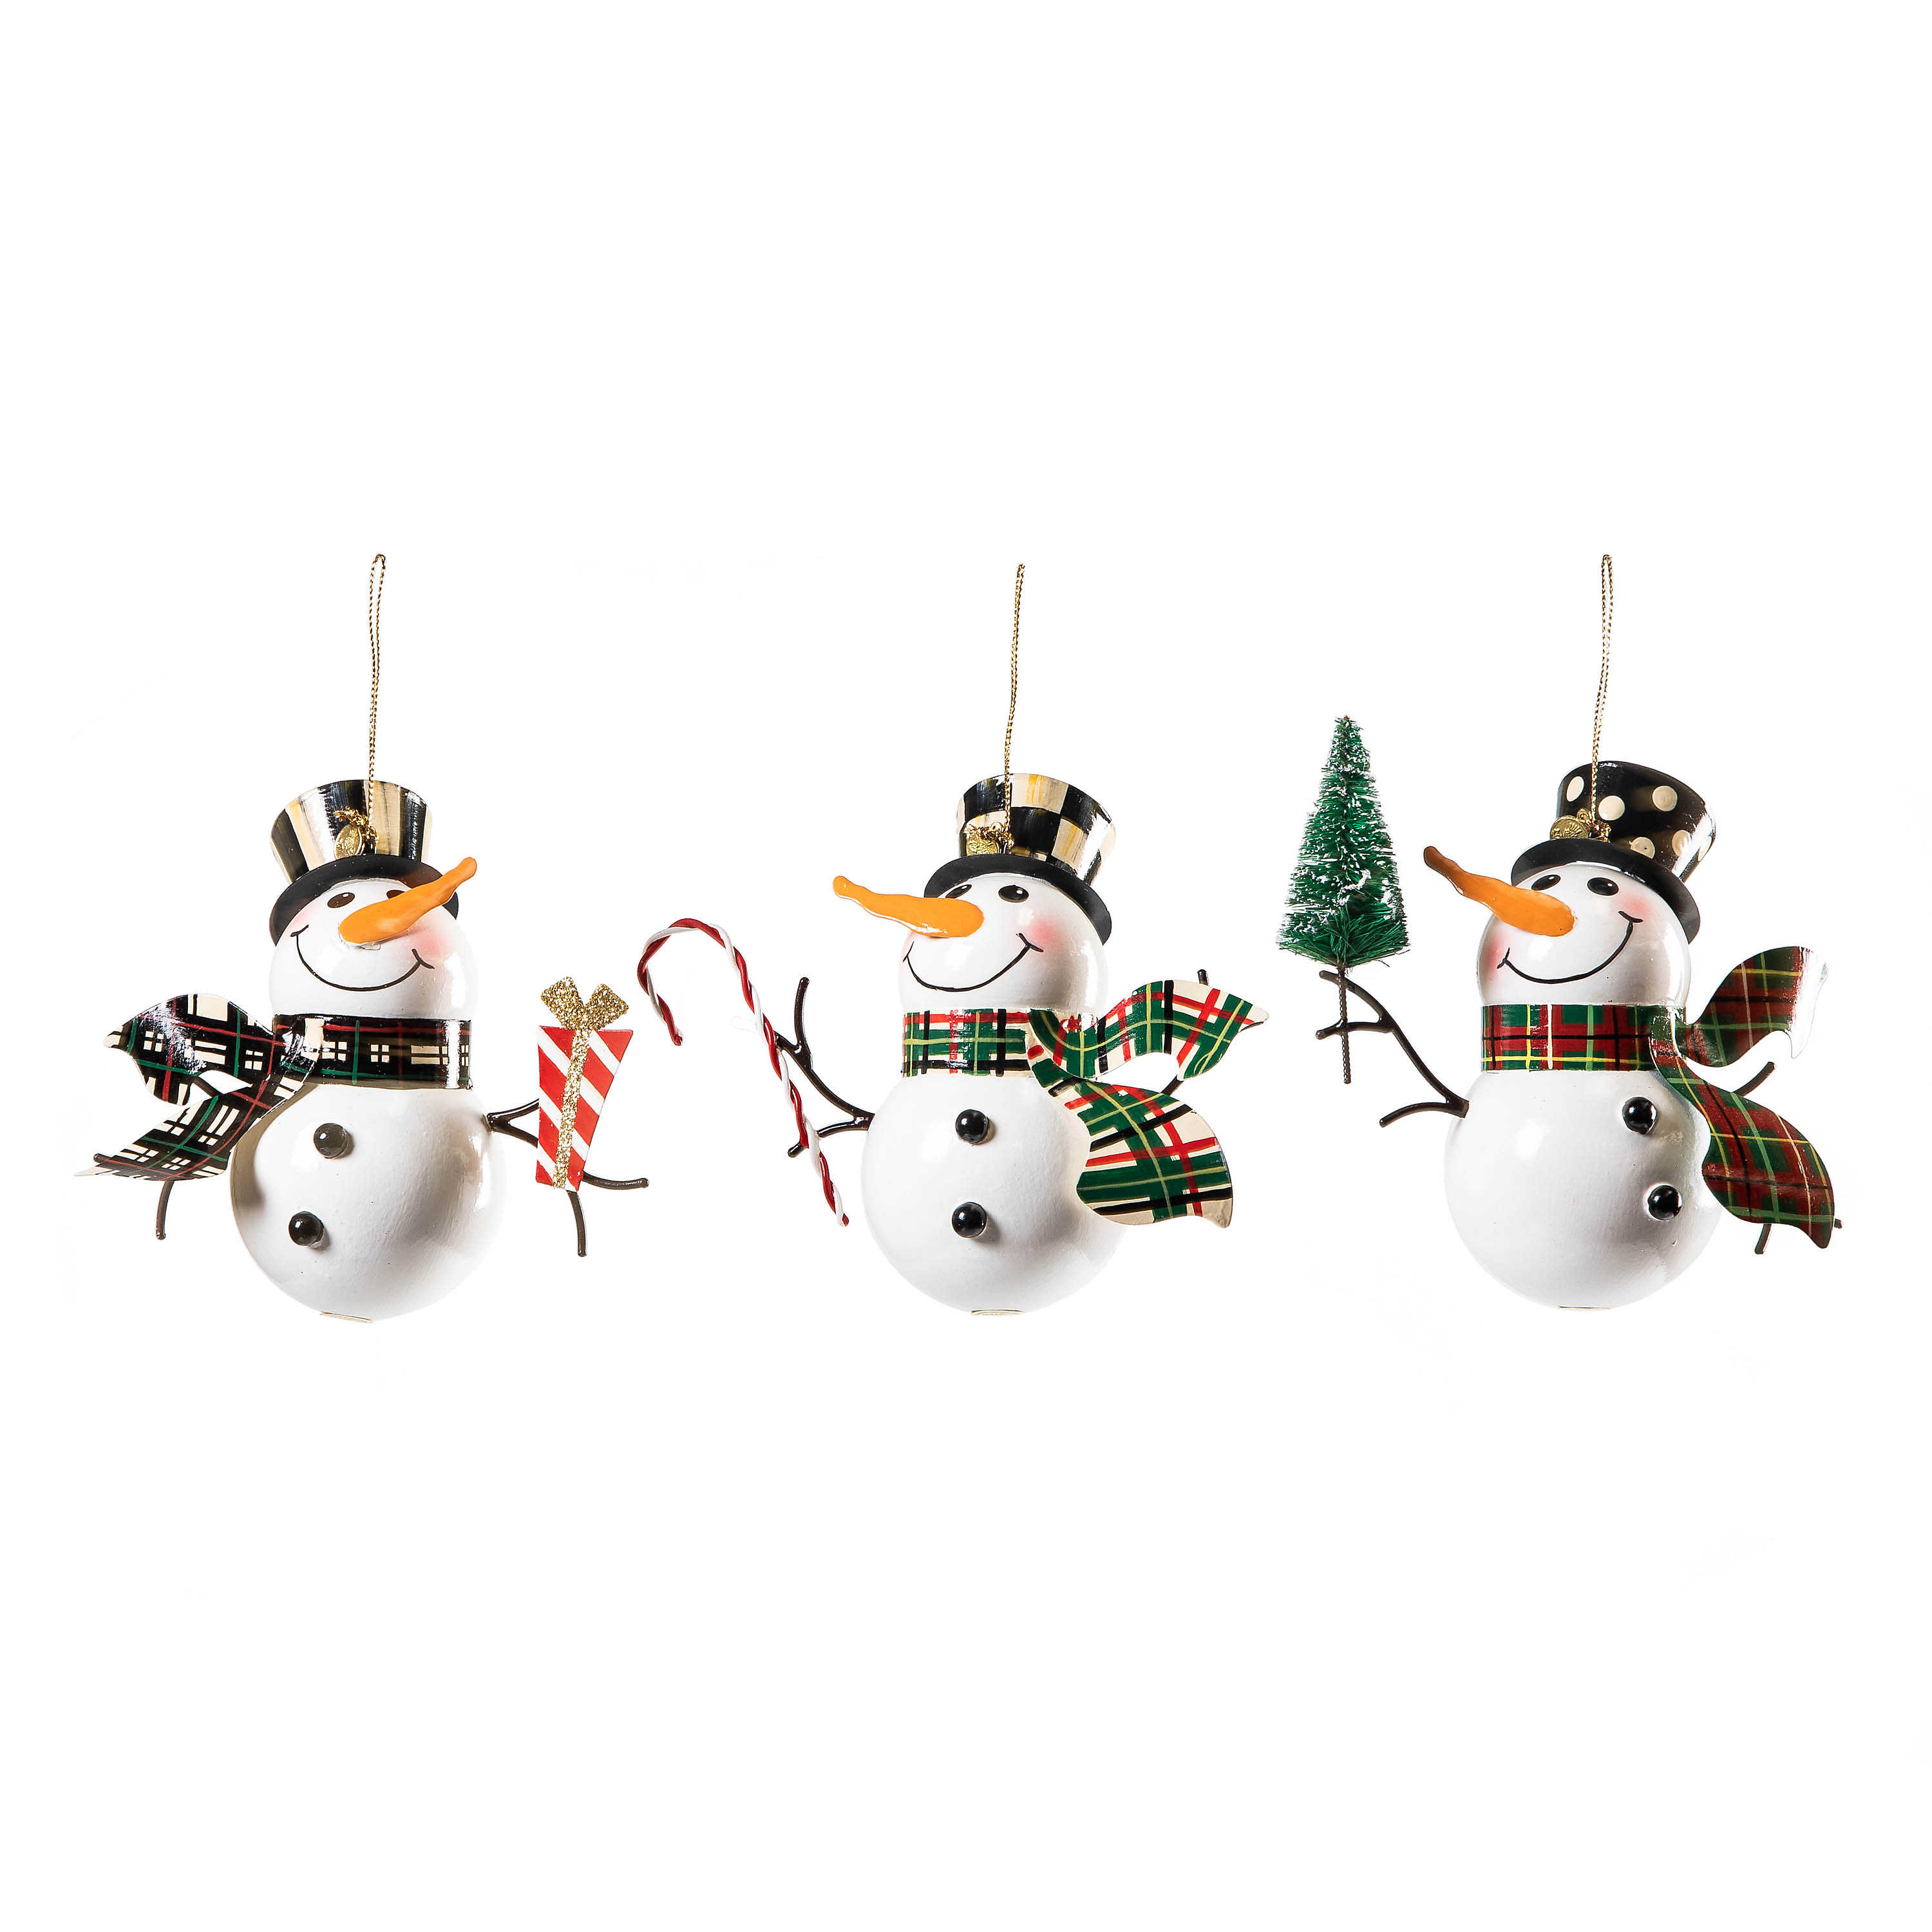 Tartastic Snowman Ornaments, Set of 3 mackenzie-childs Panama 0